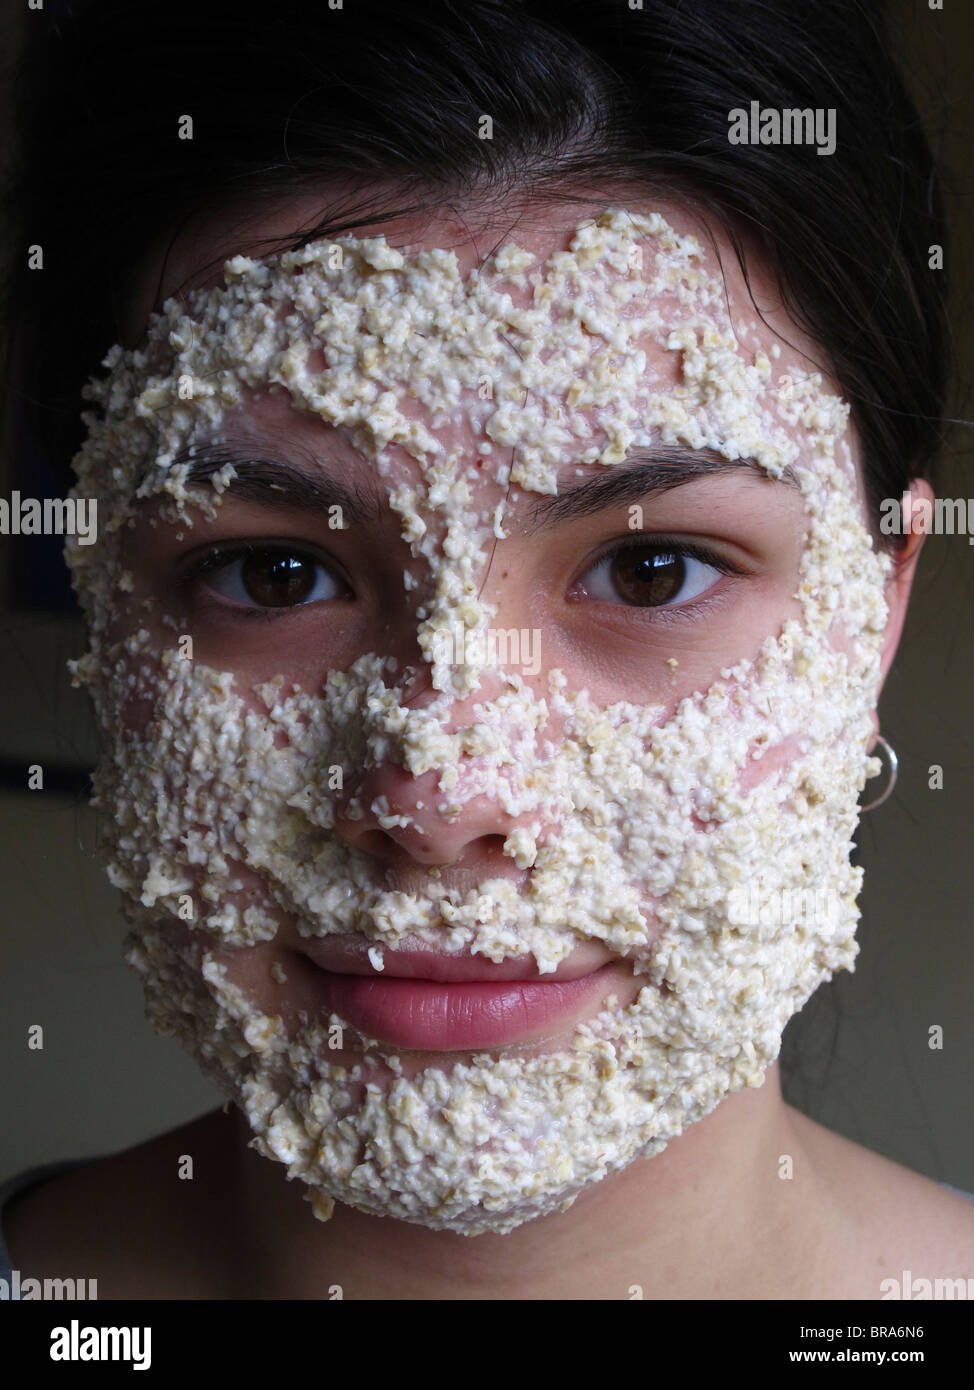 Teenage girl using an oatmeal mask to cleanse her skin Stock Photo